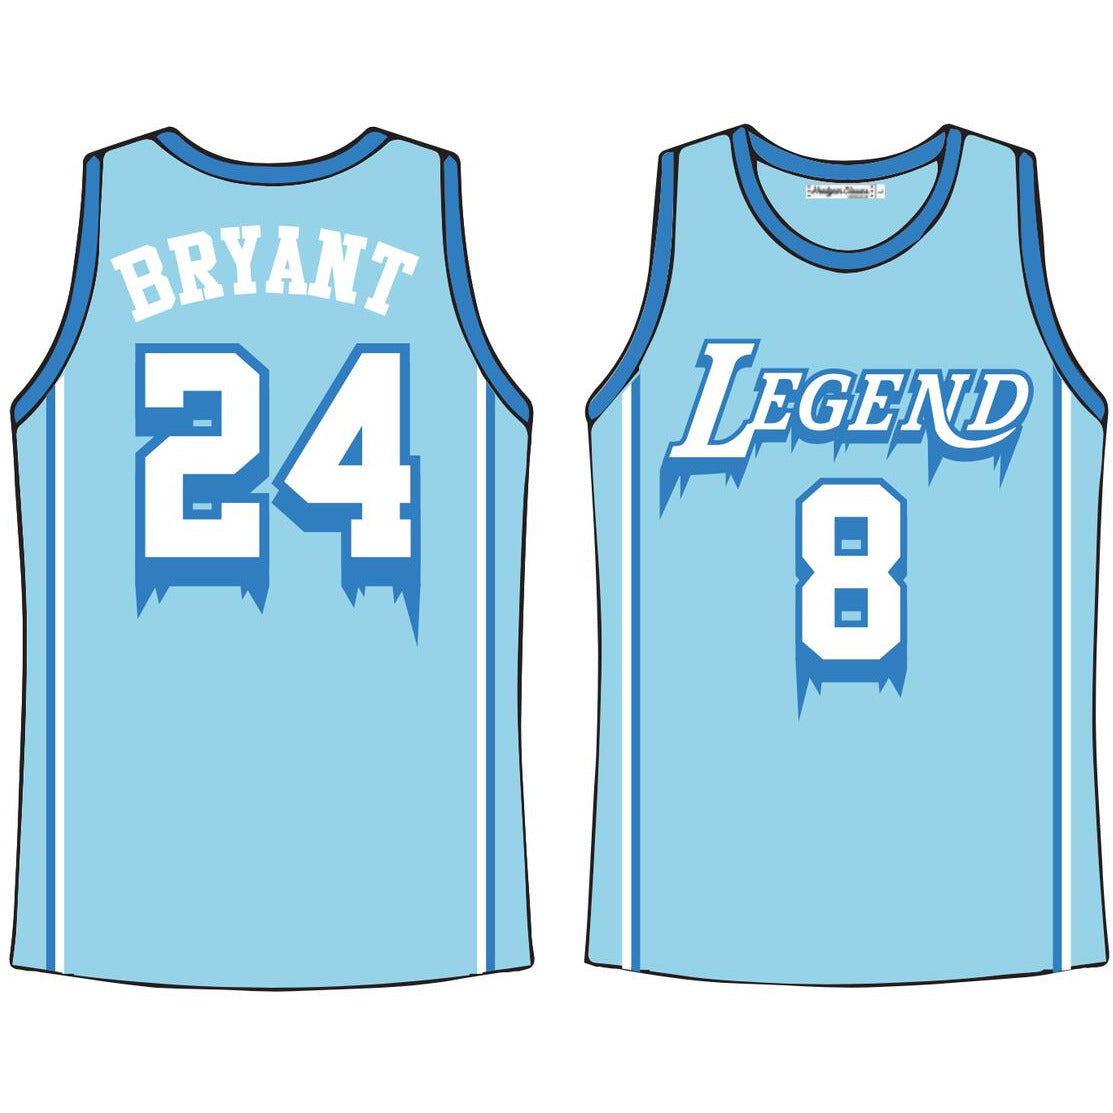 Blue Kobe Bryant NBA Jerseys for sale